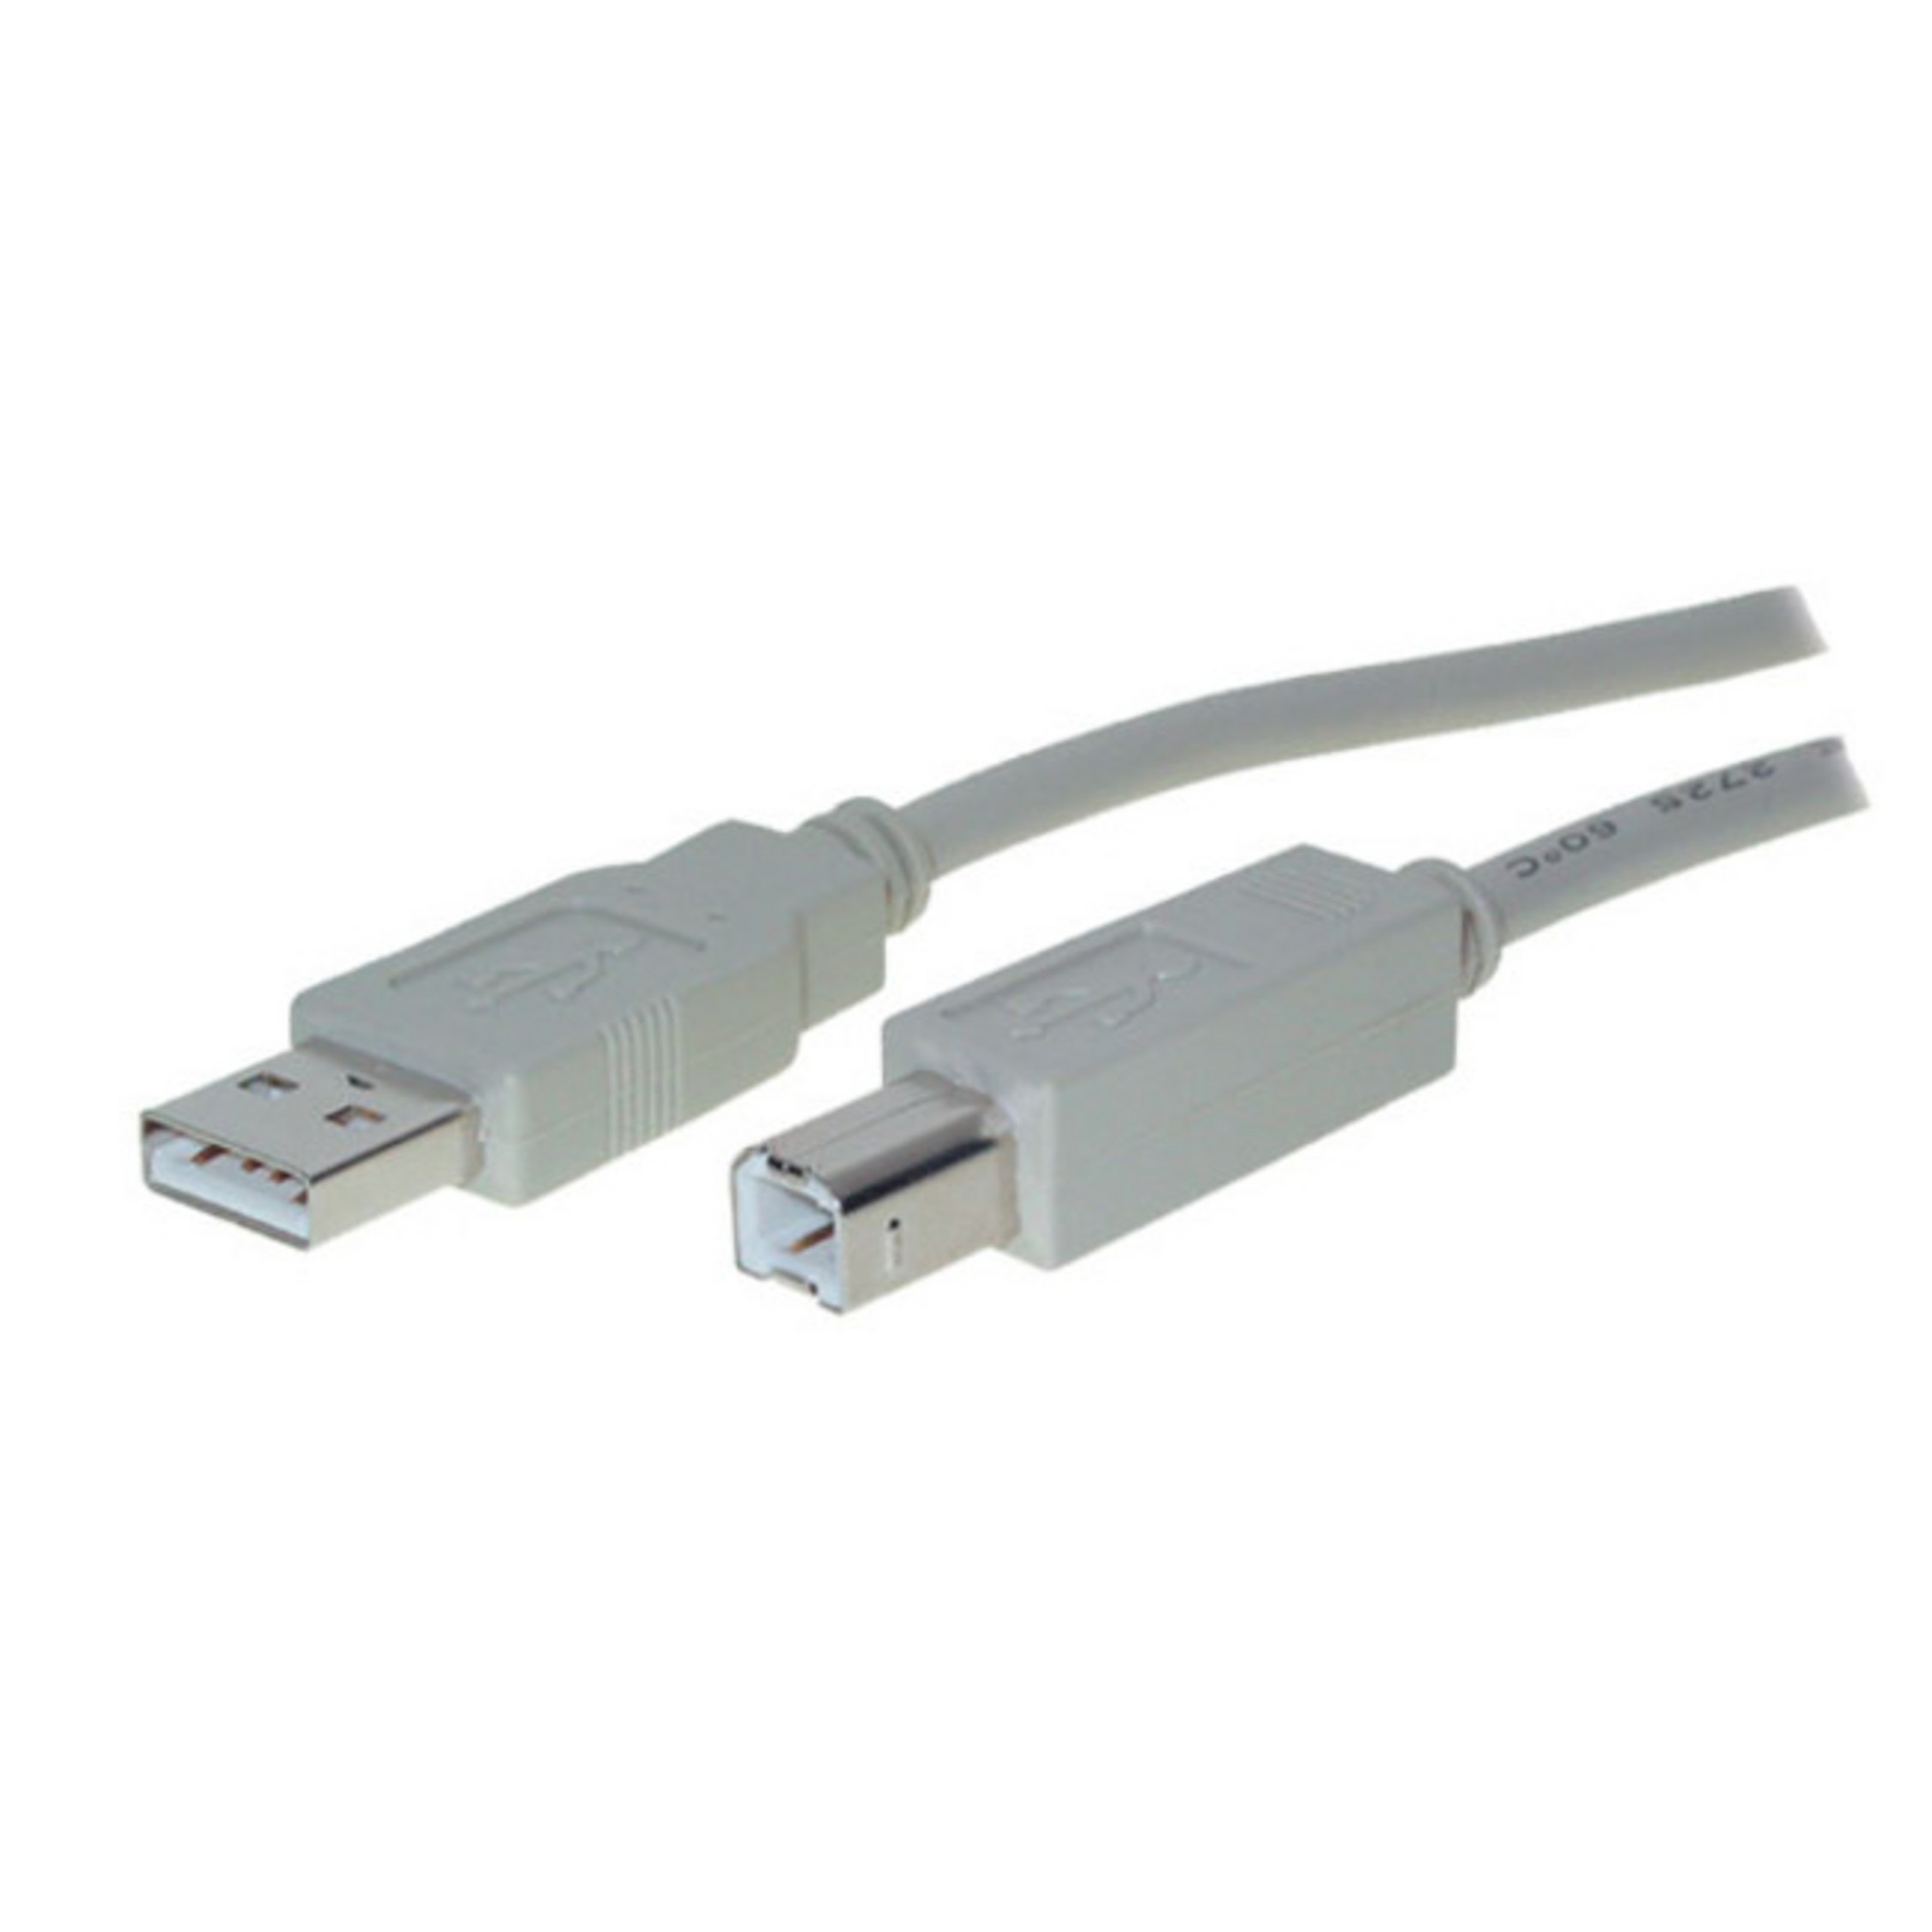 S/CONN MAXIMUM CONNECTIVITY Stecker USB USB Stecker Kabel Kabel USB 0,25m / A 2.0 B